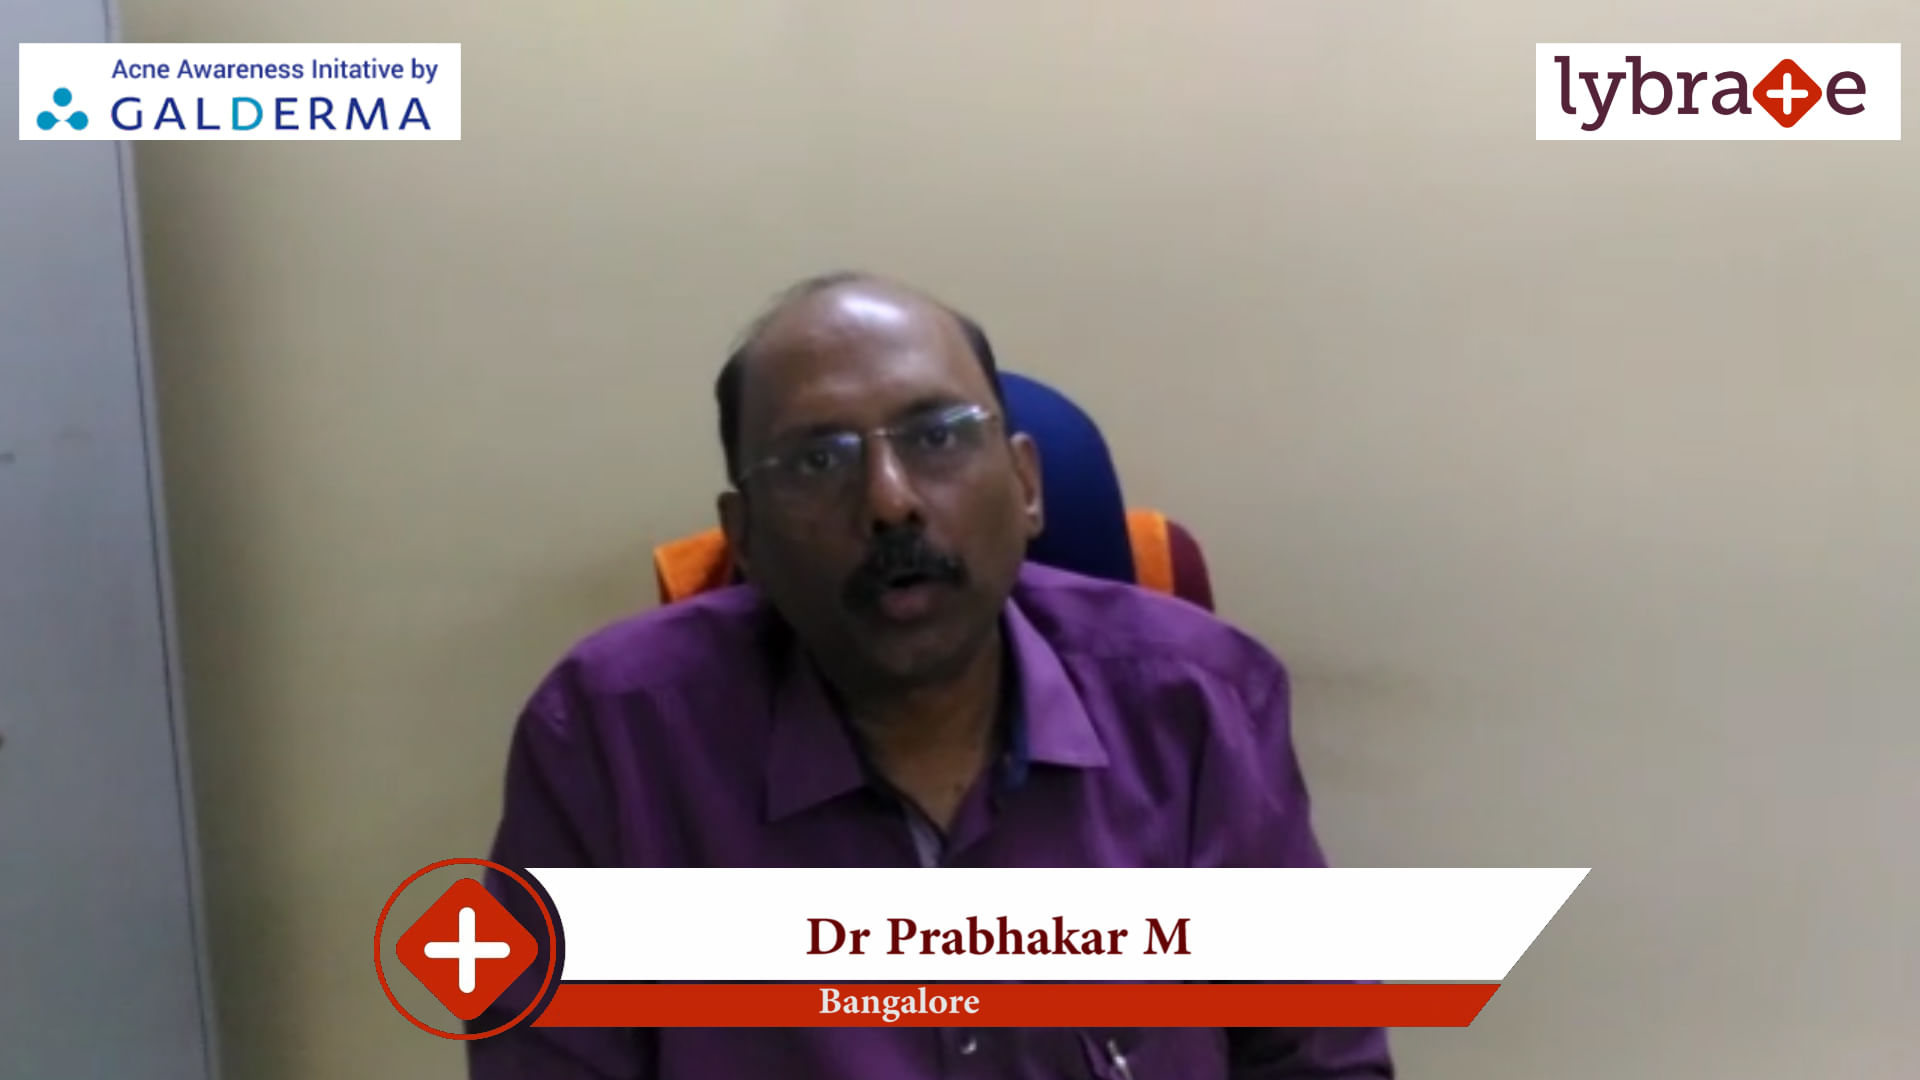 Lybrate | Dr. Prabhakar M speaks on IMPORTANCE OF TREATING ACNE EARLY